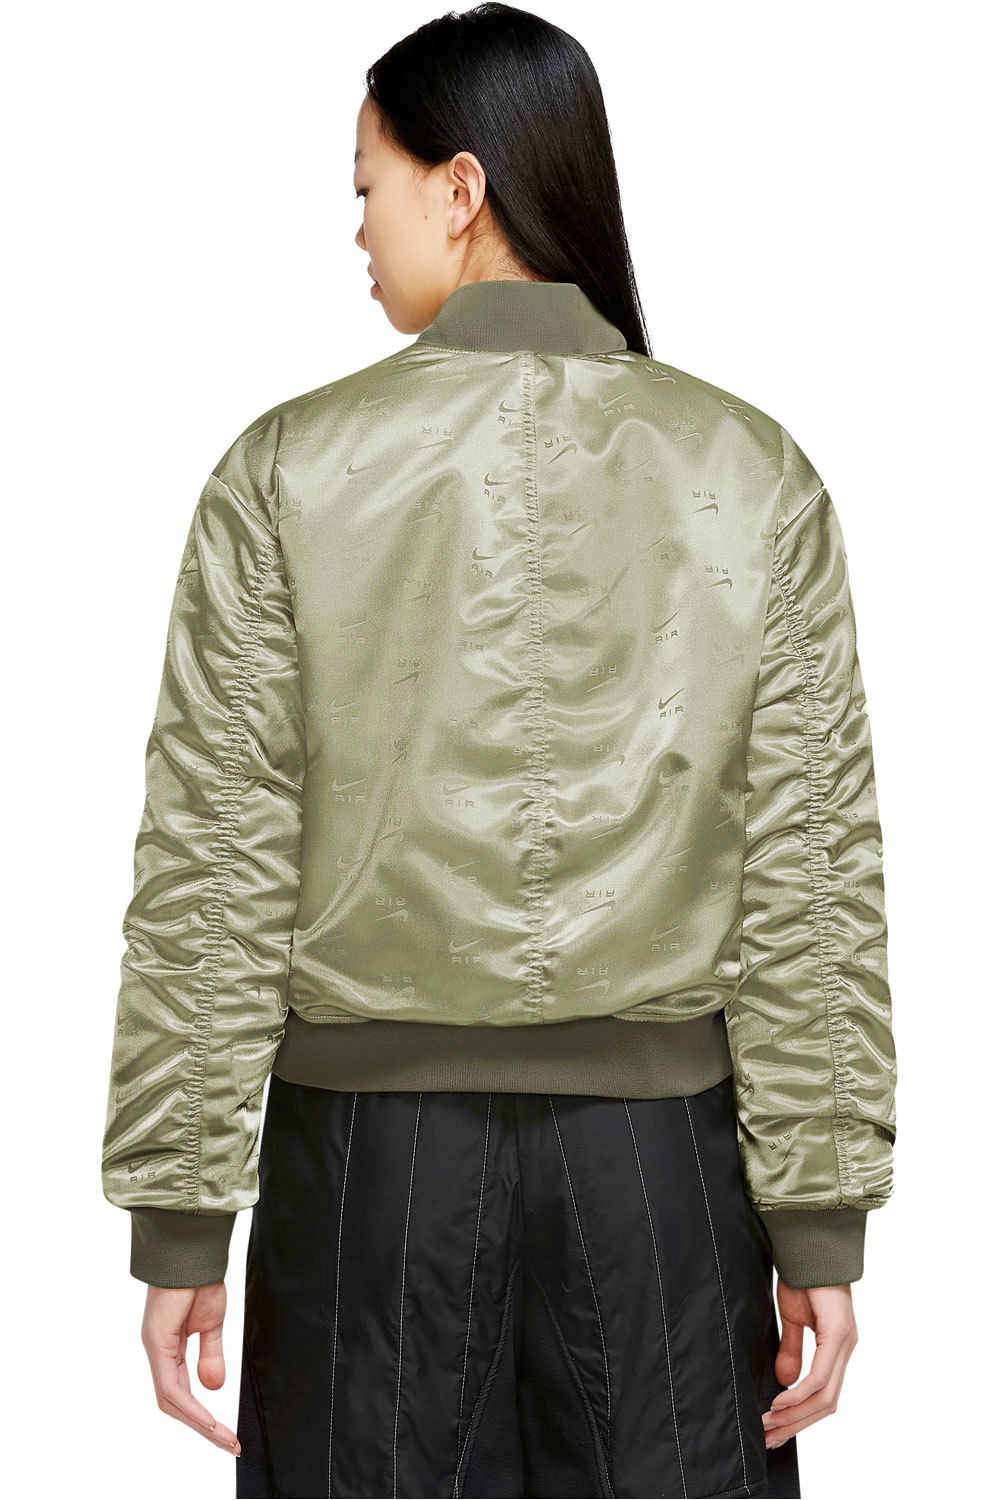 Nike chaquetas mujer NSW AIR BMBR JKT vista trasera